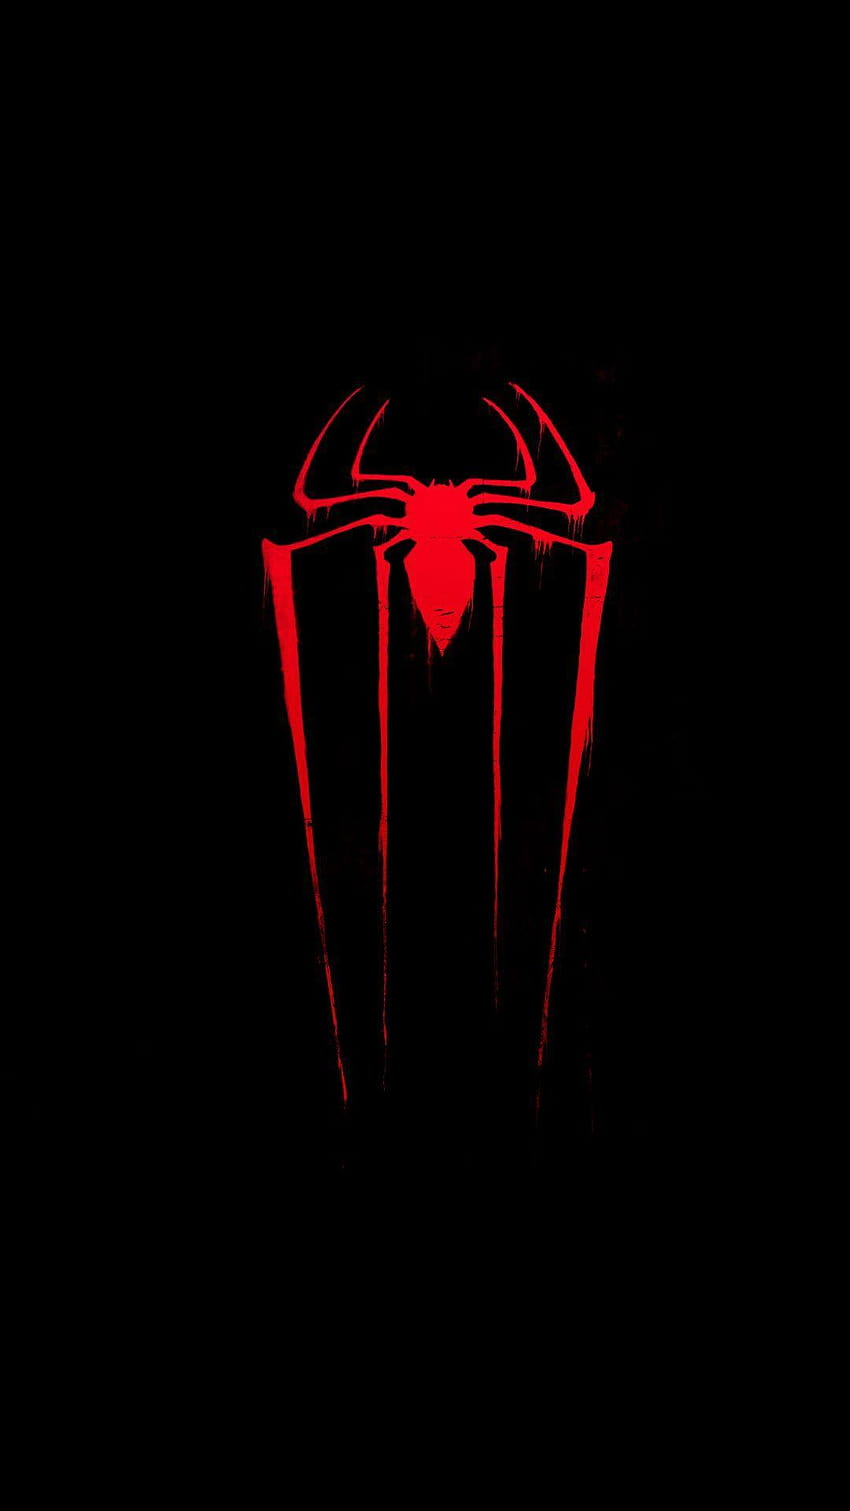 Logotipo de Spiderman Amoled, hombre araña de neón amoled fondo de pantalla del teléfono